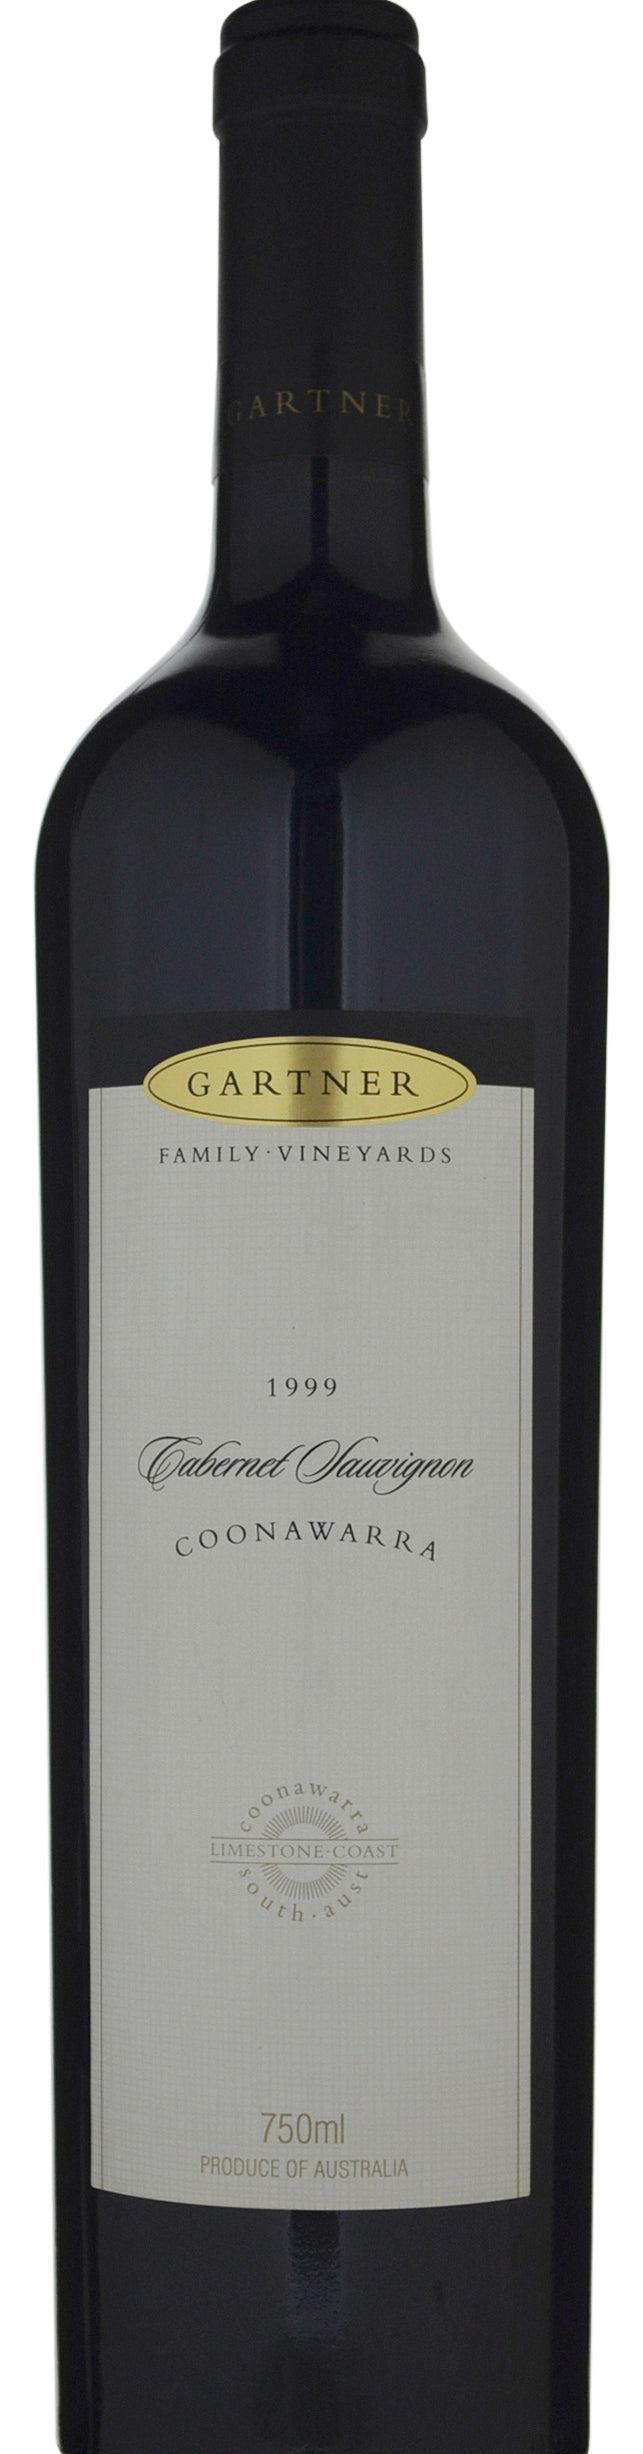 Gartner Coonawarra Cabernet Sauvignon 1999